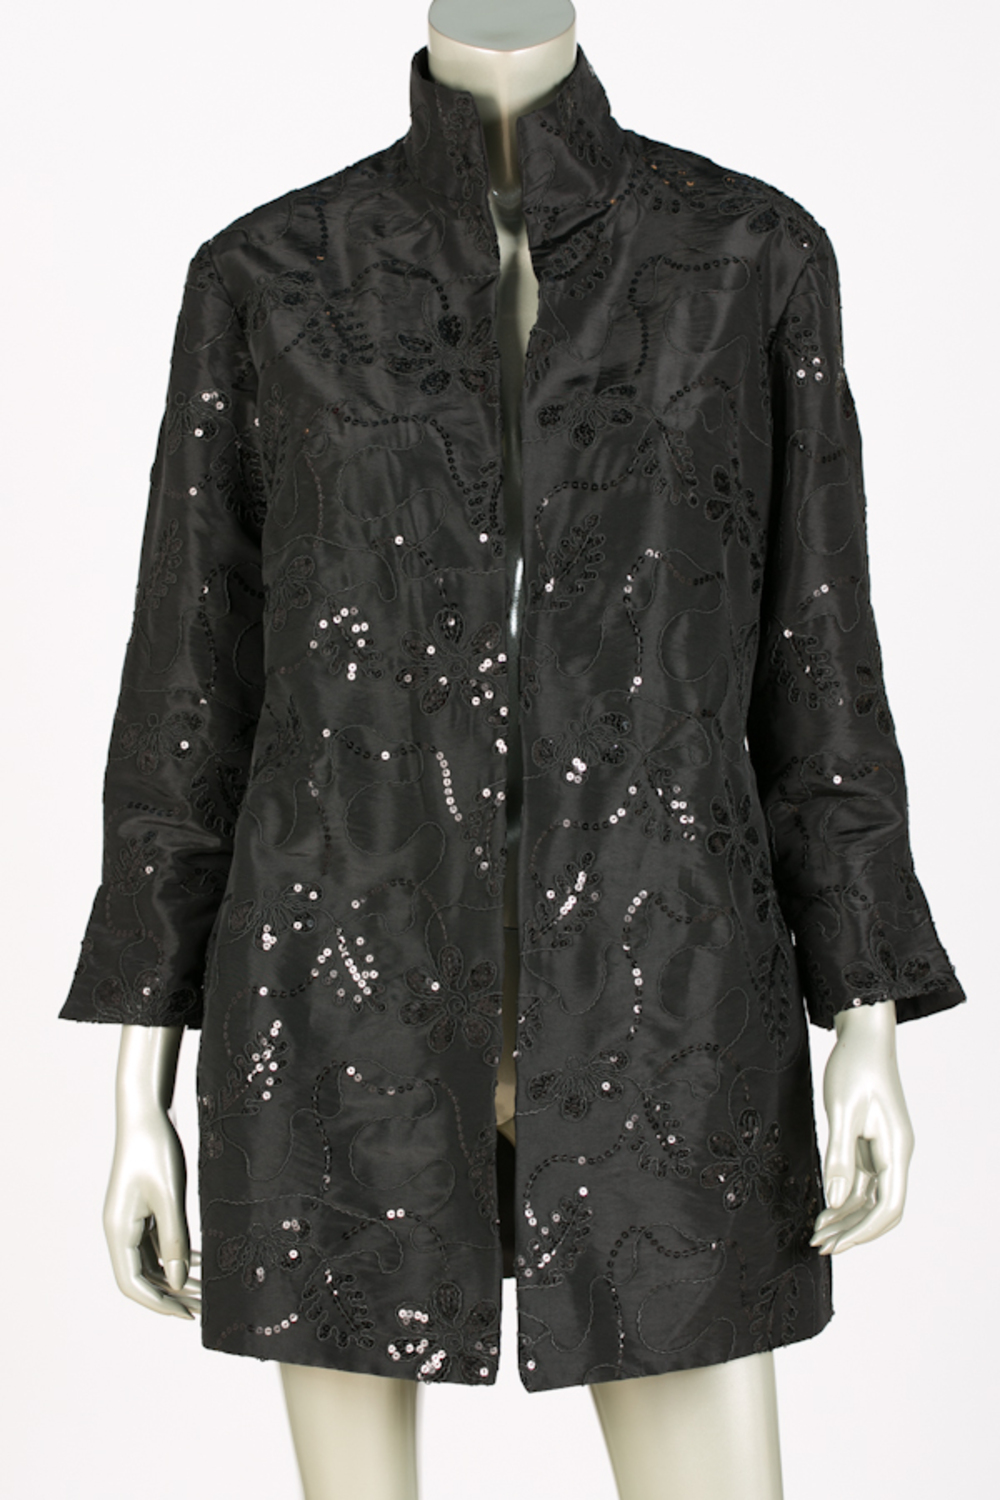 Joseph Ribkoff coat style 34460. Black